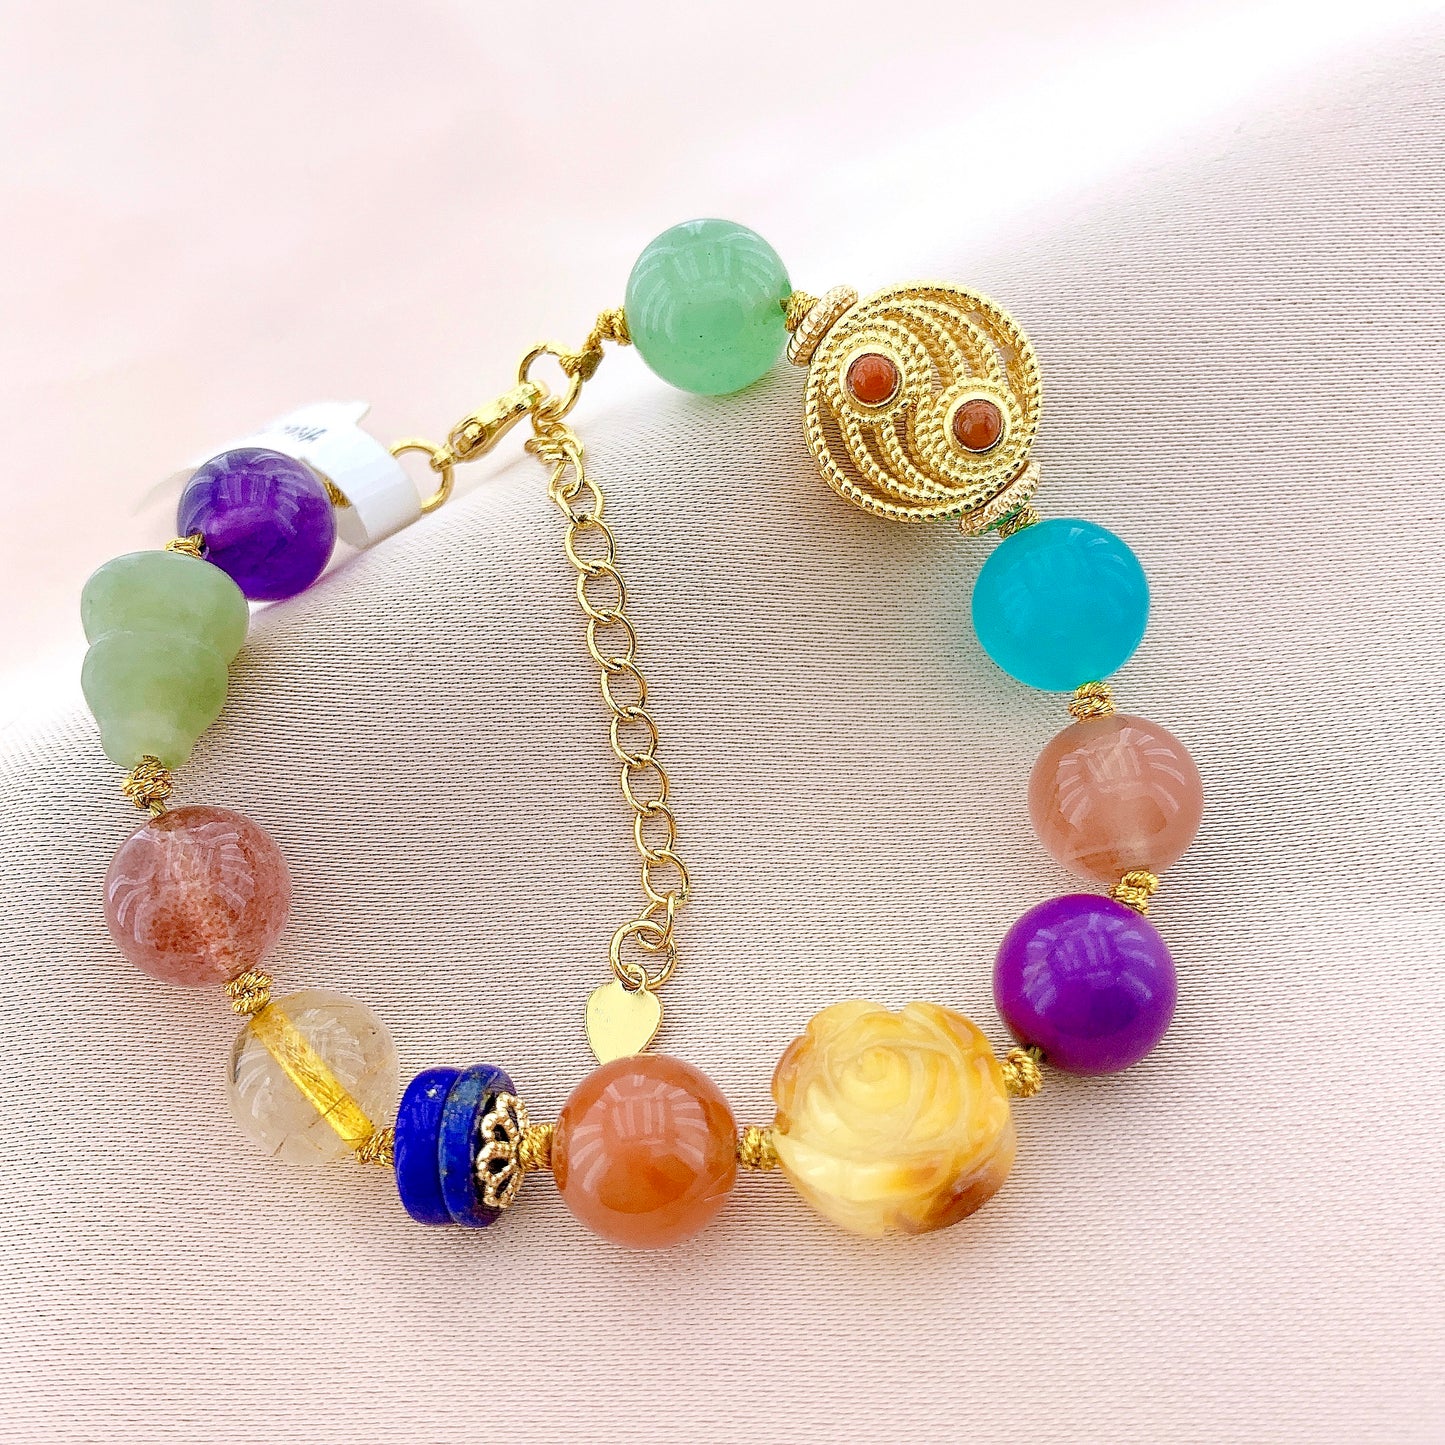 Women's Fashion Multic Color Beads Gemstone Bracelets